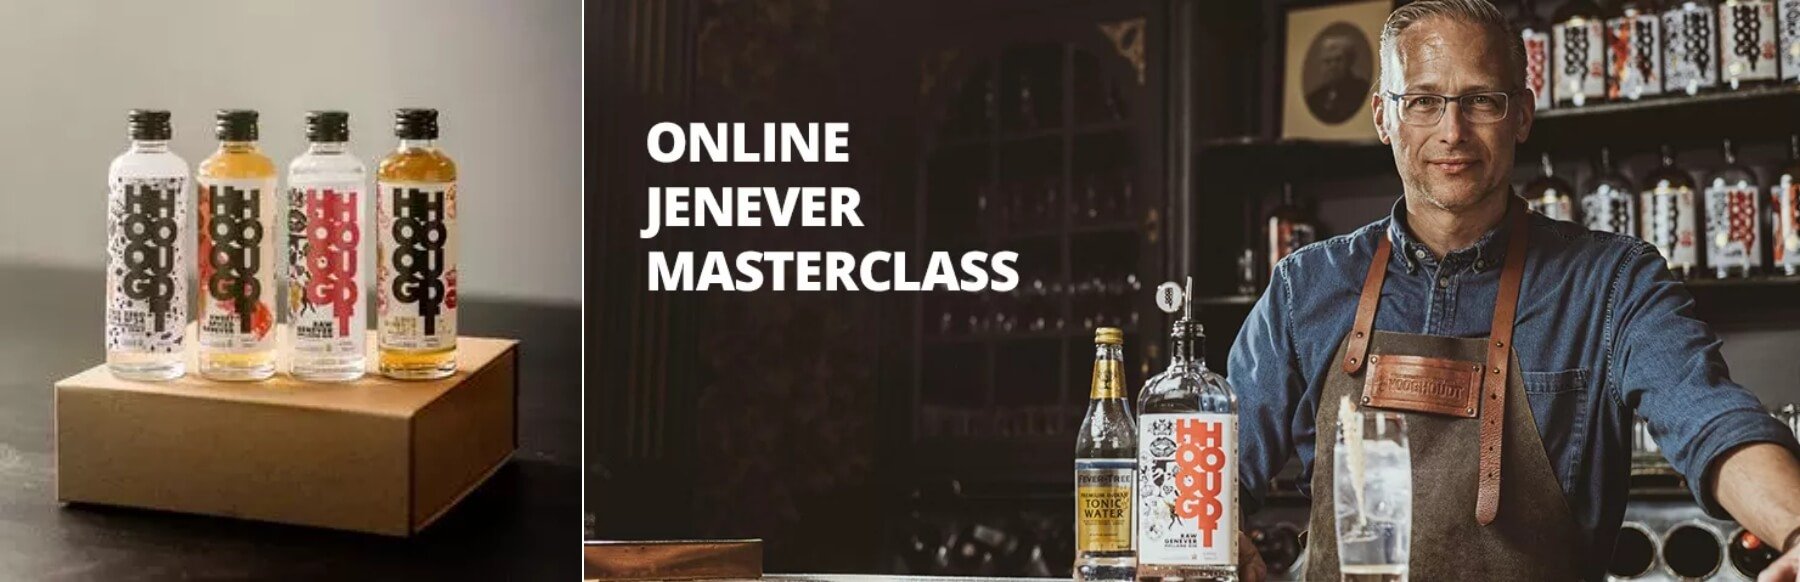 online-jenever-masterclass (1)